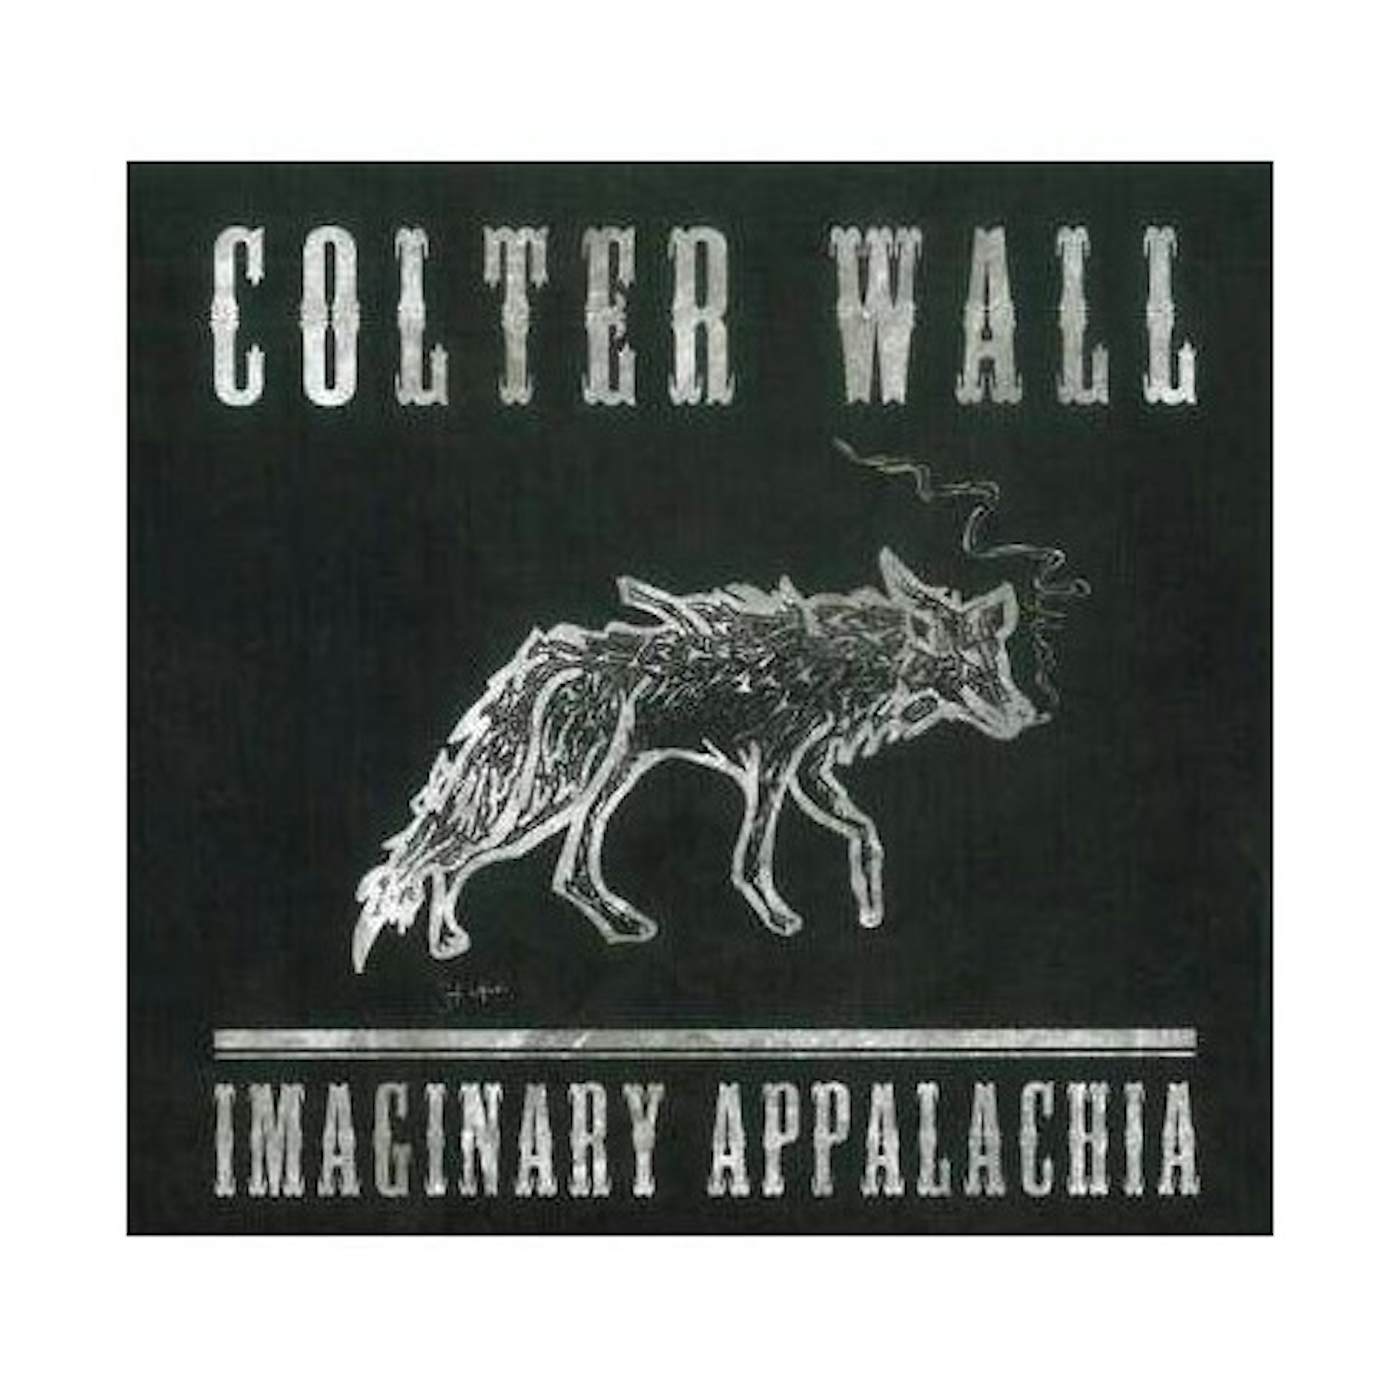 Colter Wall Imaginary Appalachia (45 RPM) Vinyl Record